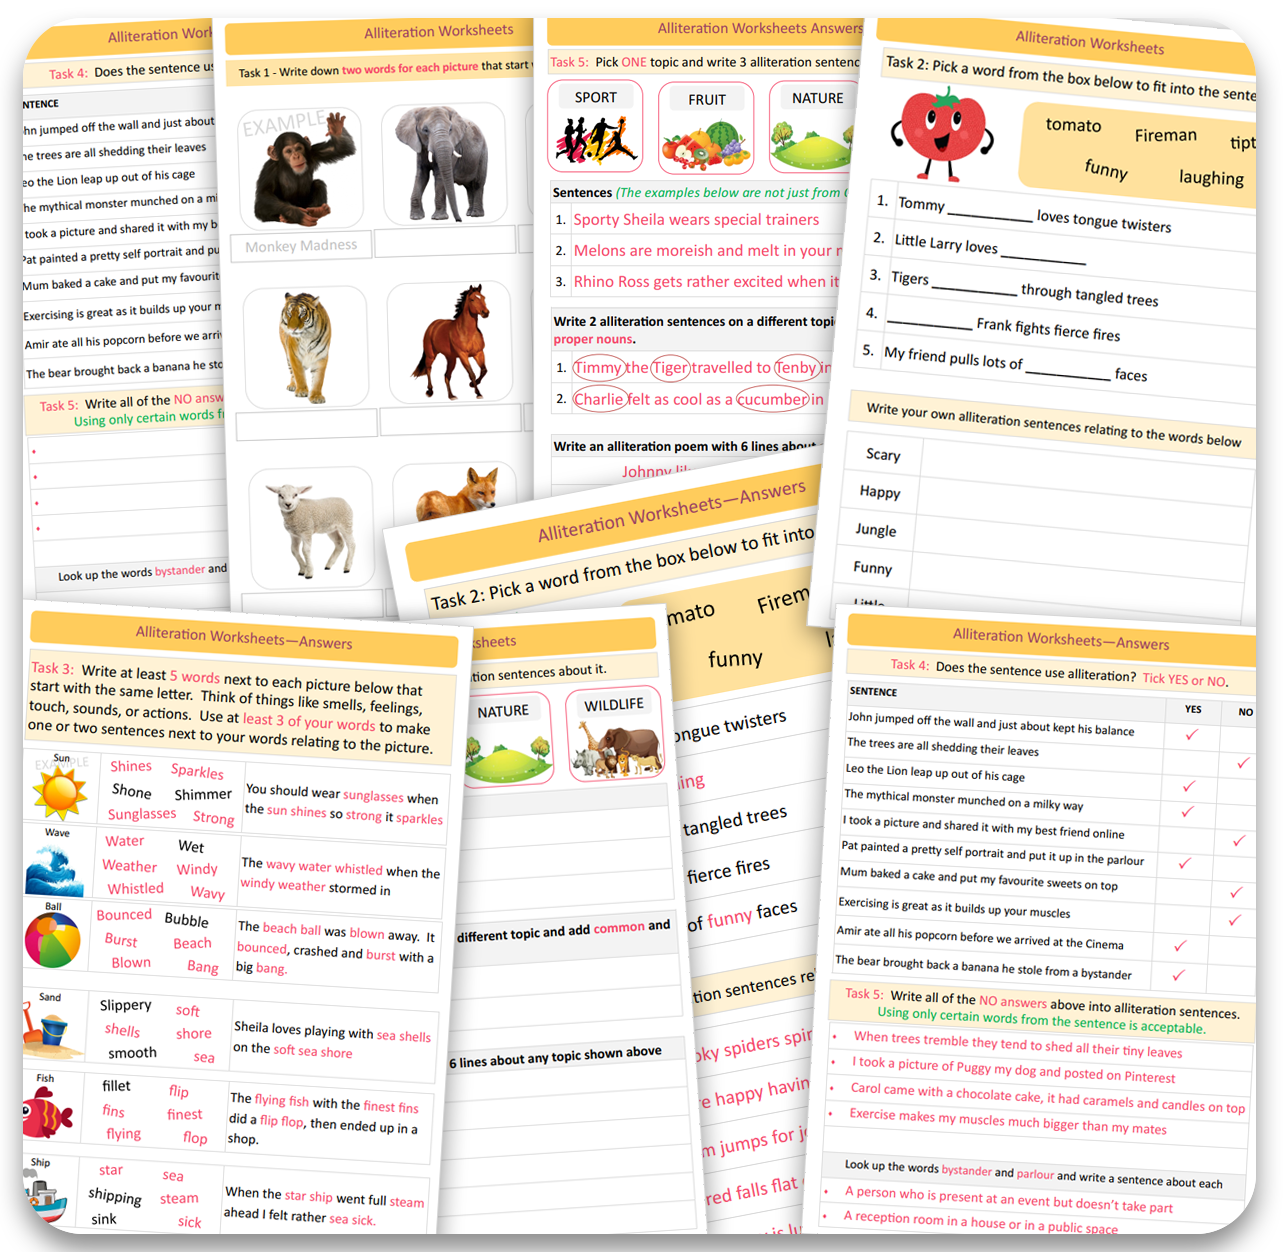 alliteration-worksheets-ks2-ks3-primary-school